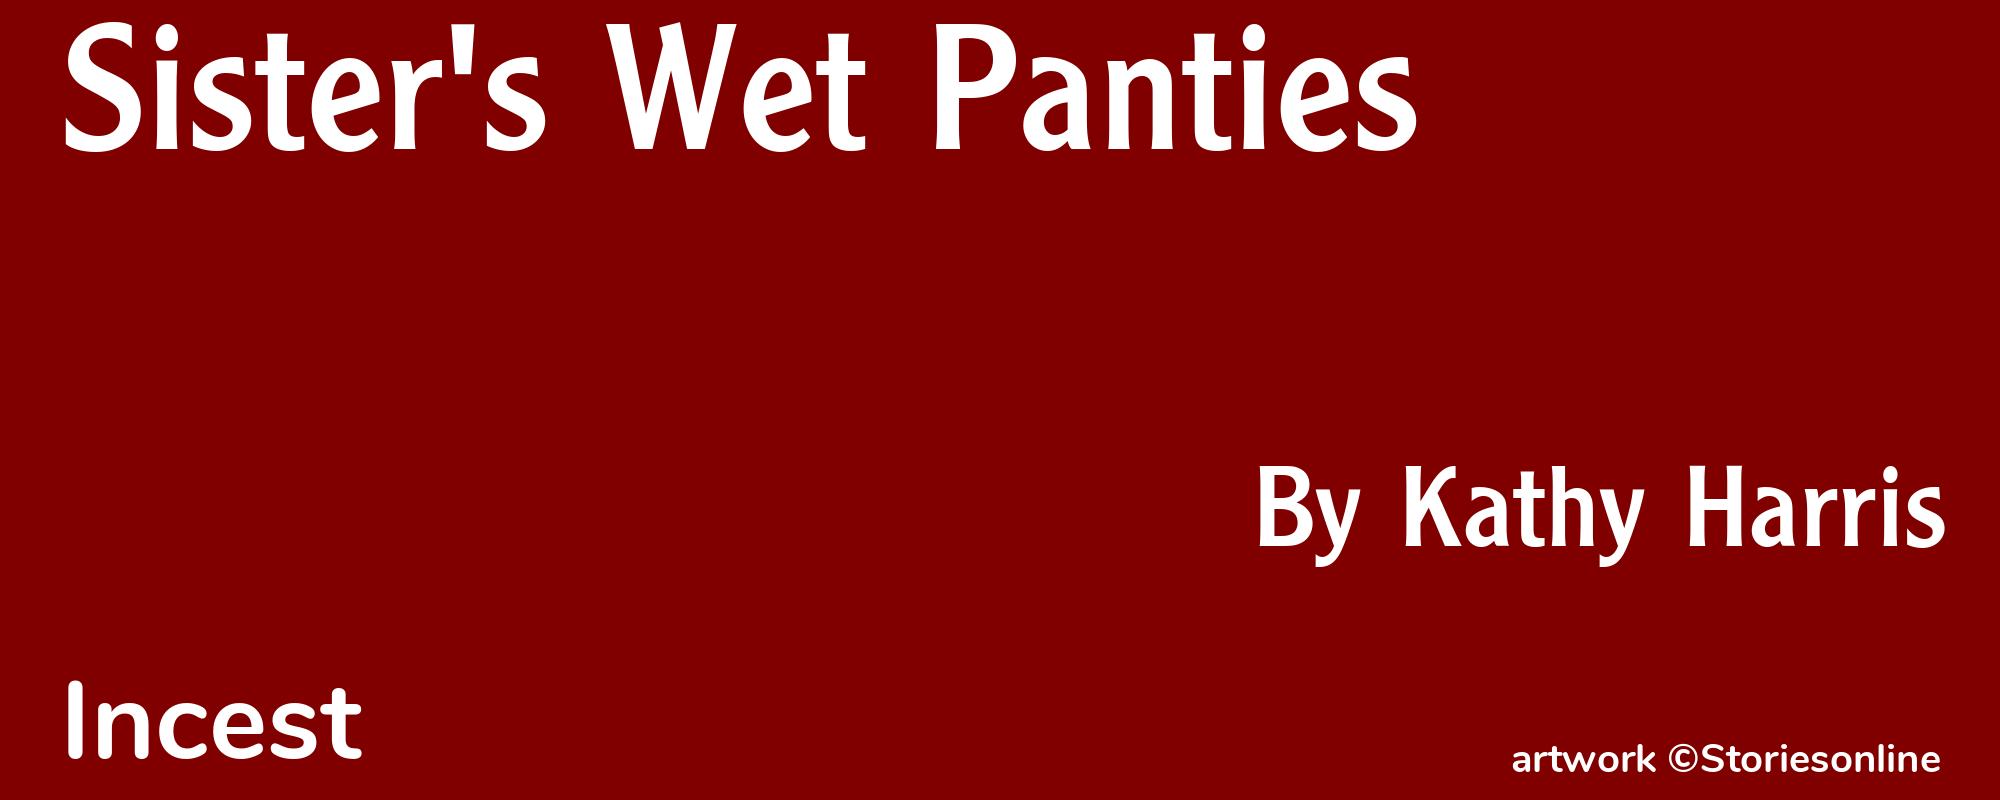 Sister's Wet Panties - Cover